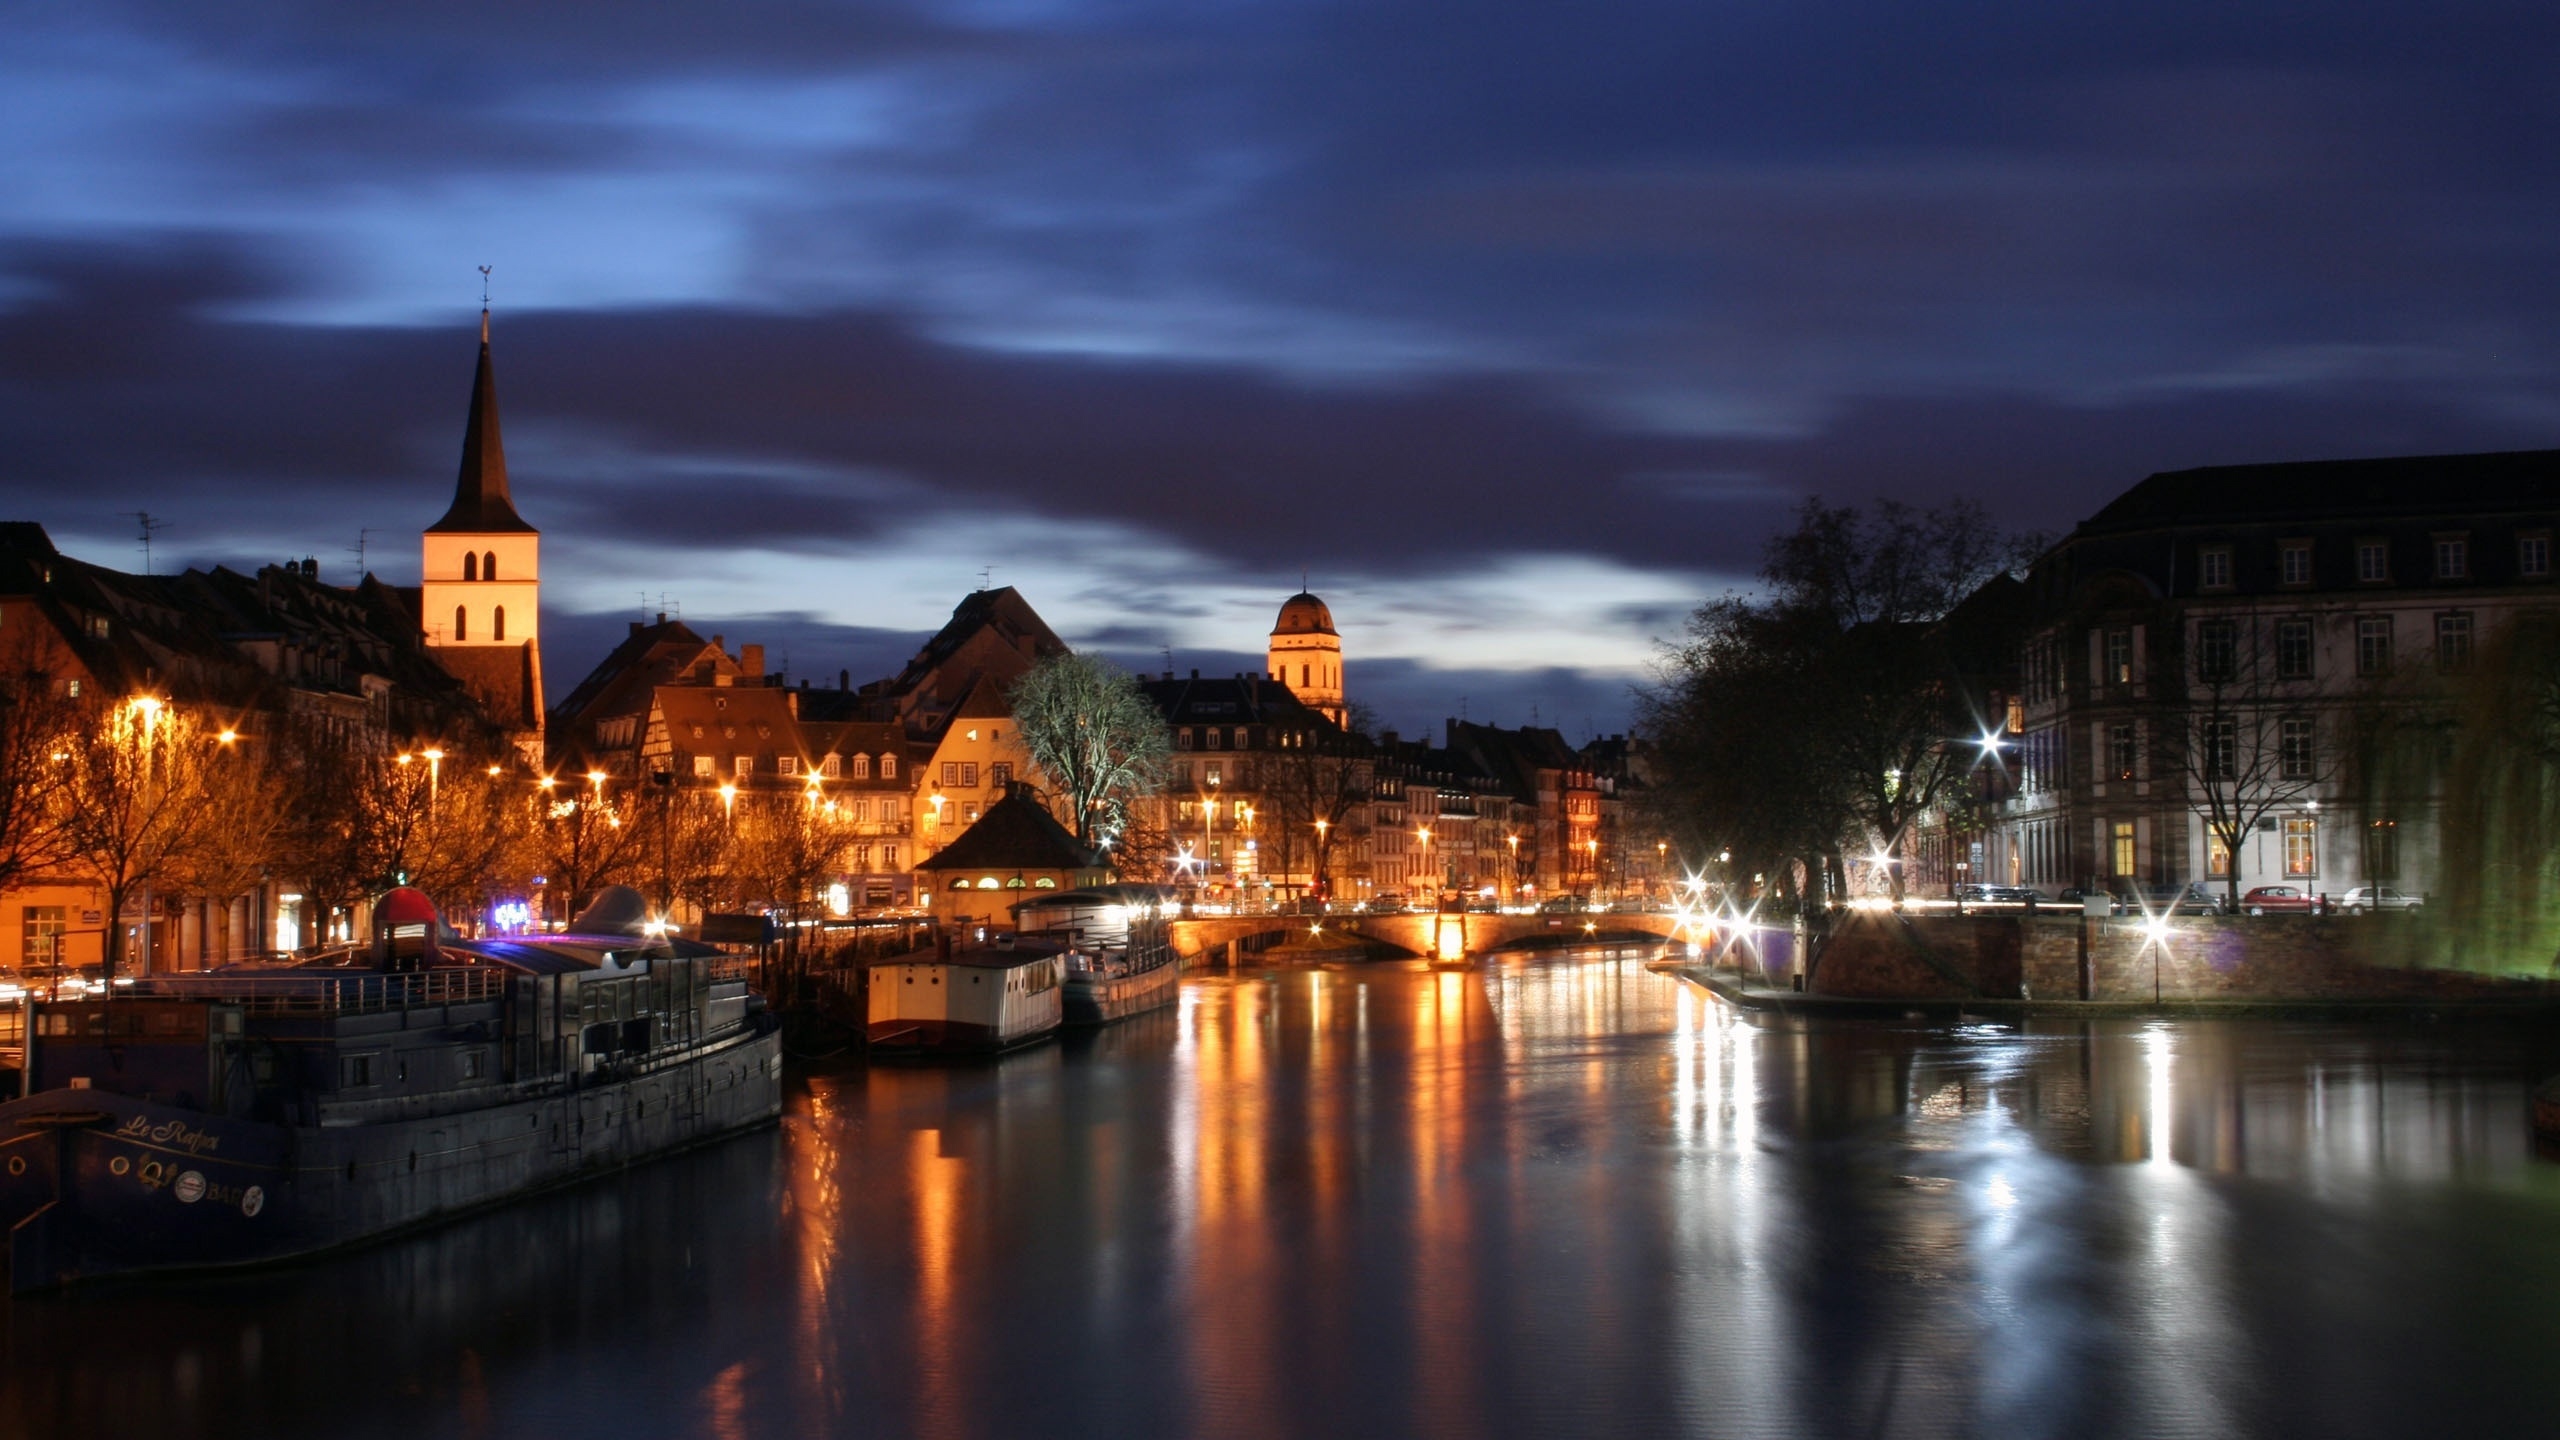 True Colors of Strasbourg for 2560x1440 HDTV resolution